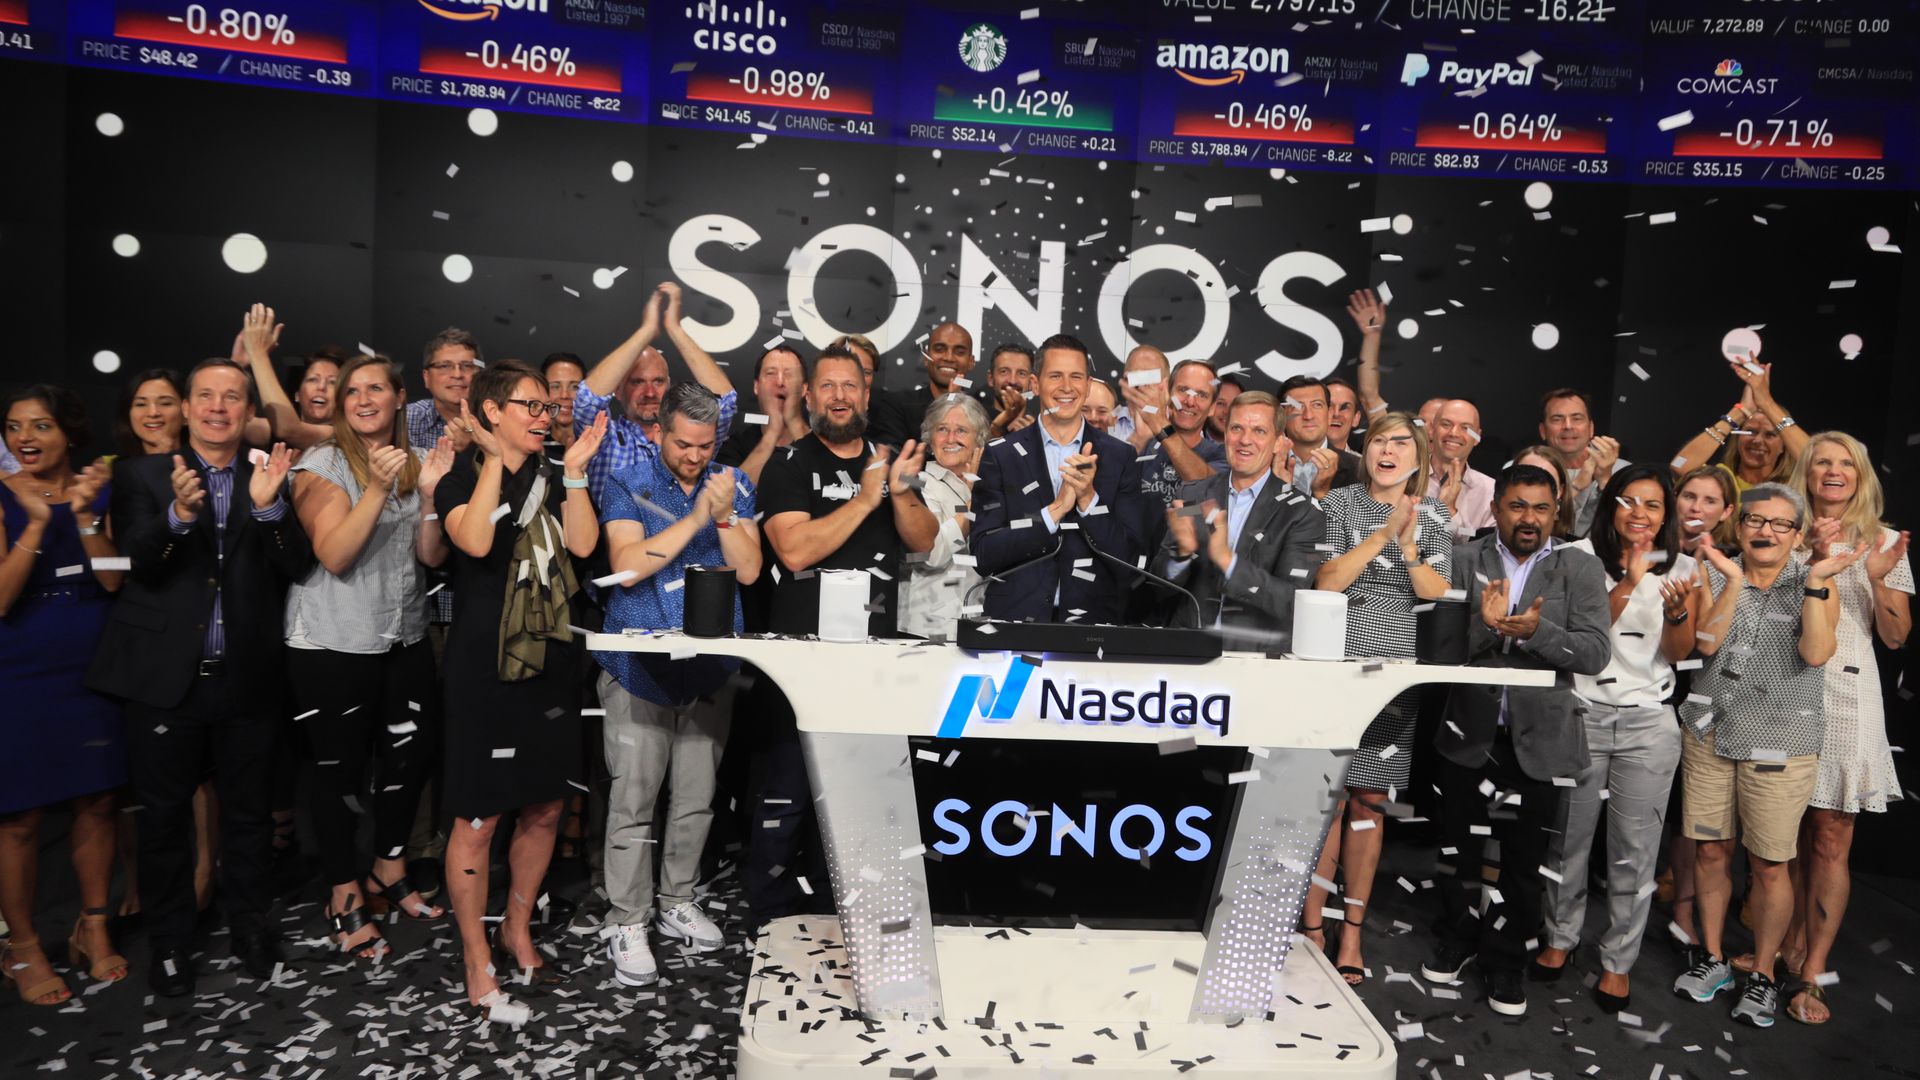 Sonos employees celebrate the company's IPO